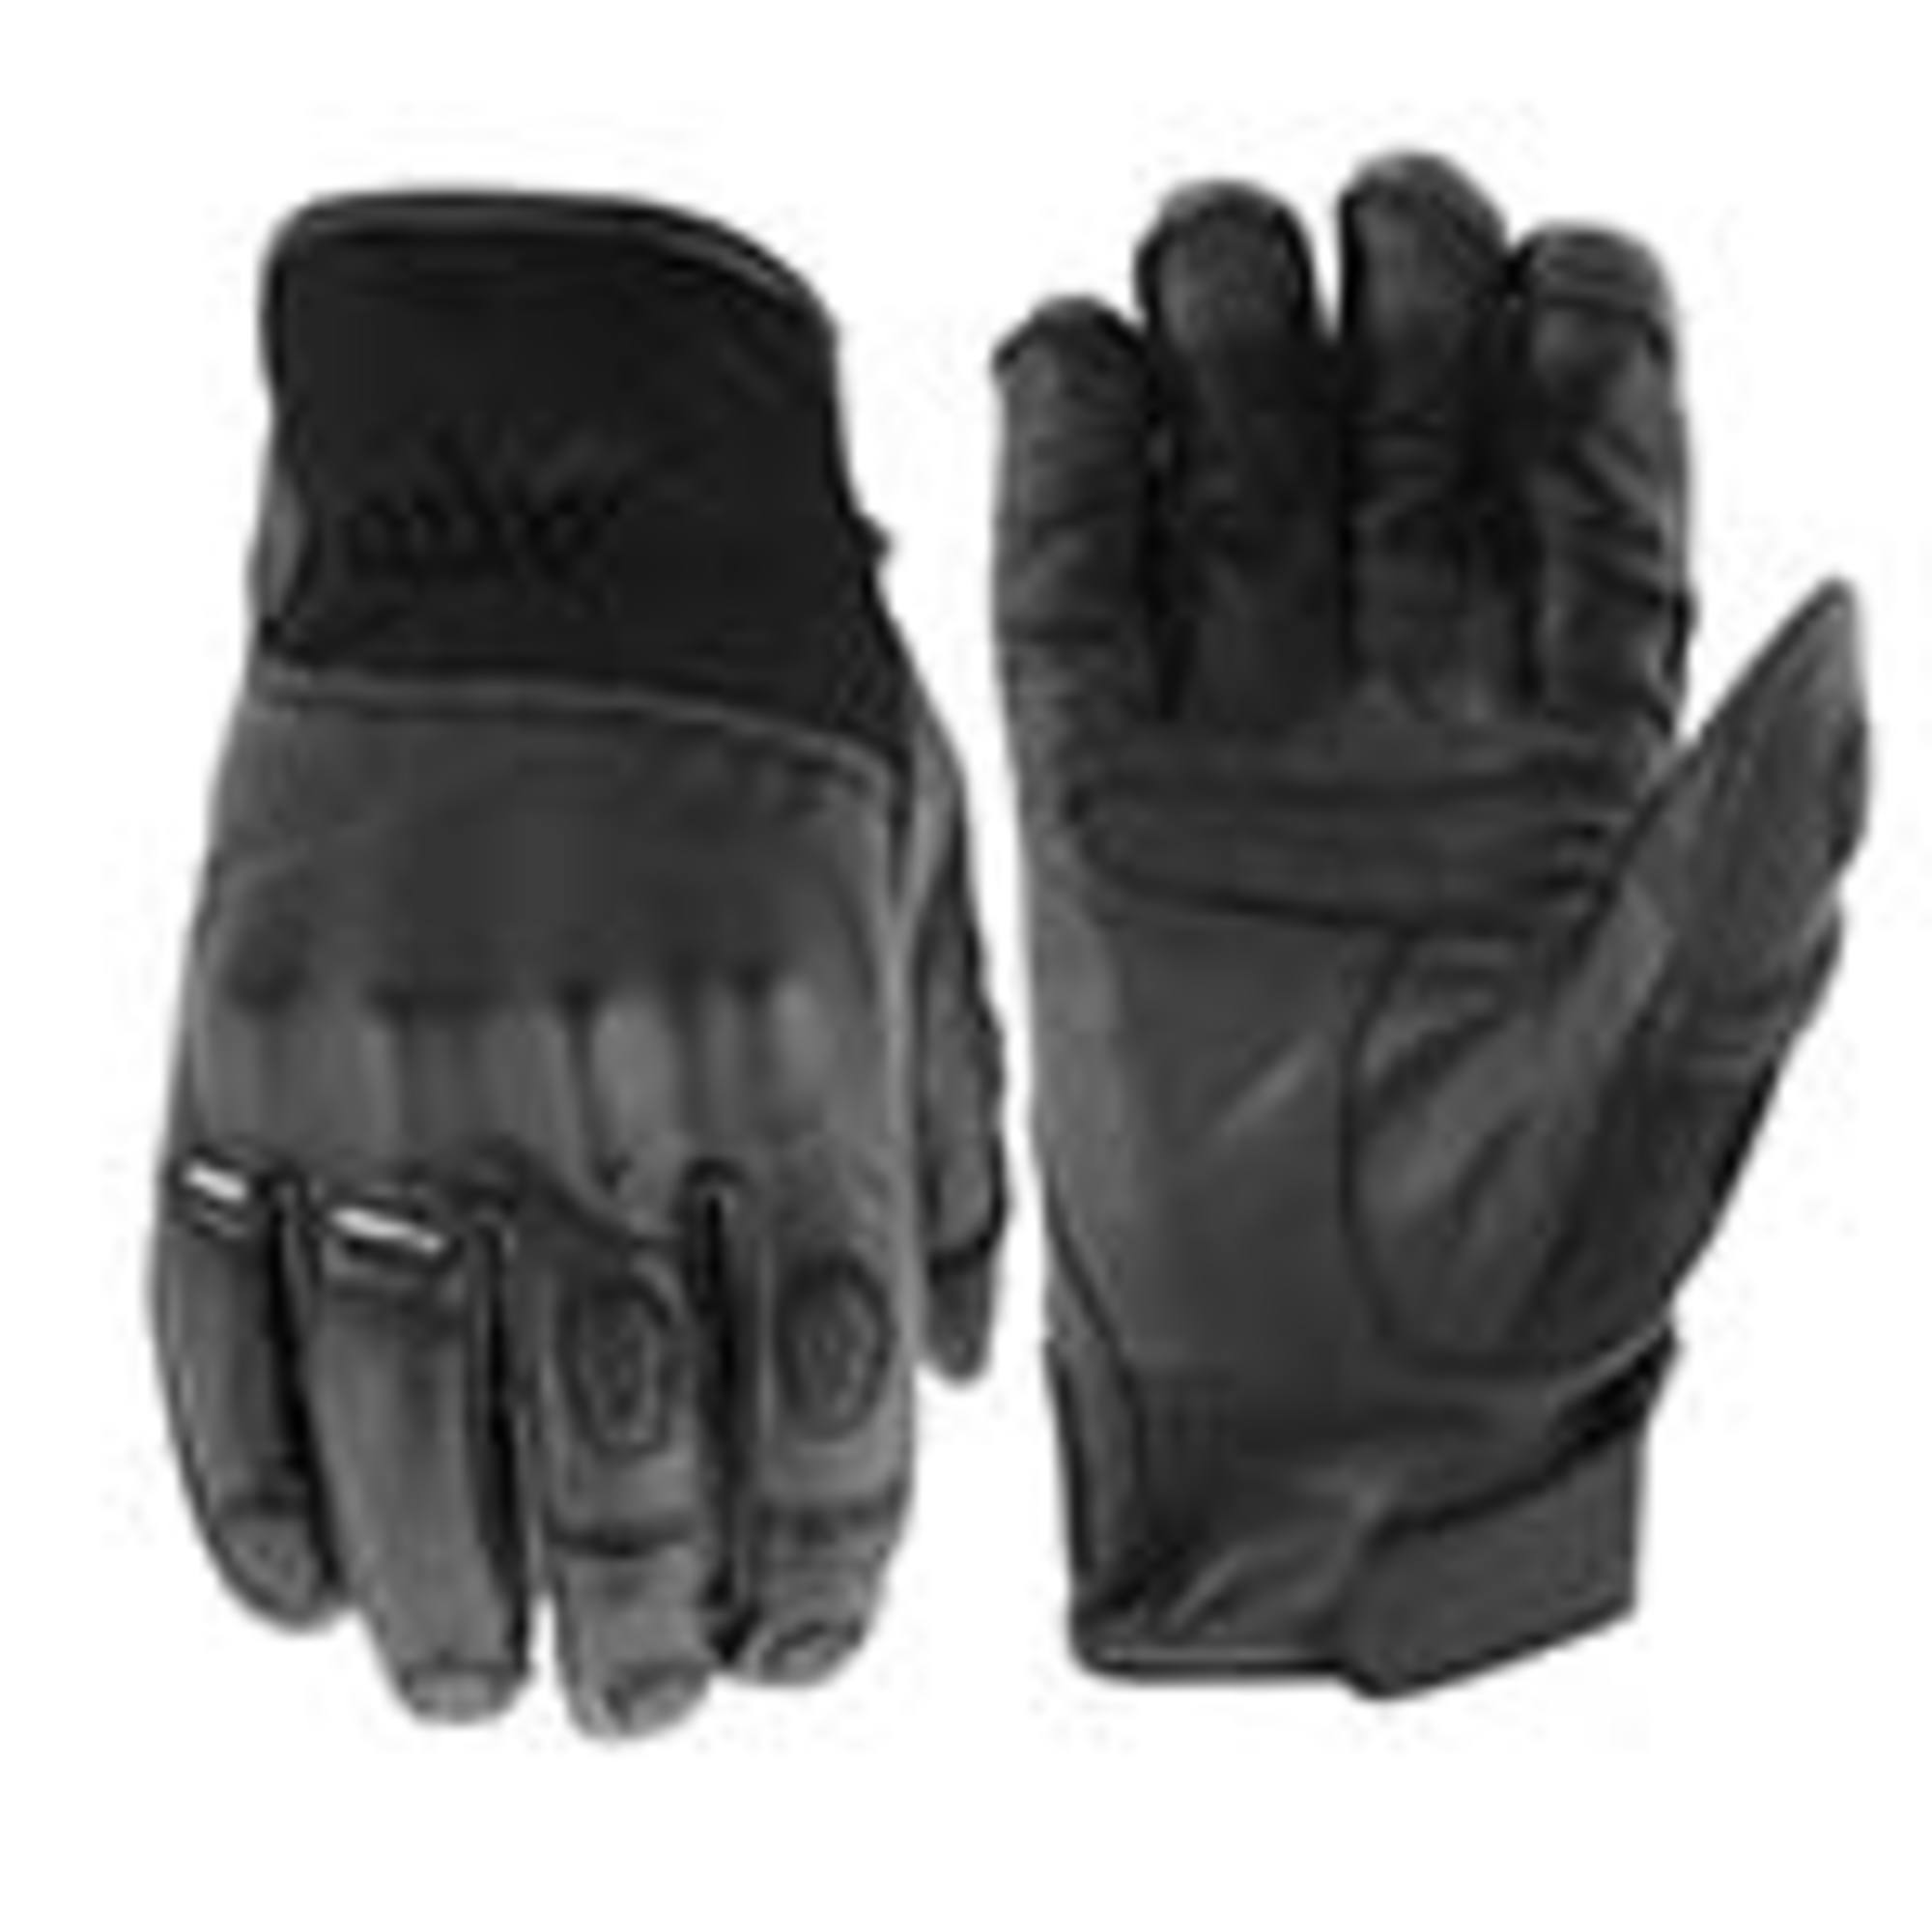 joe rocket leather gloves for men reactor